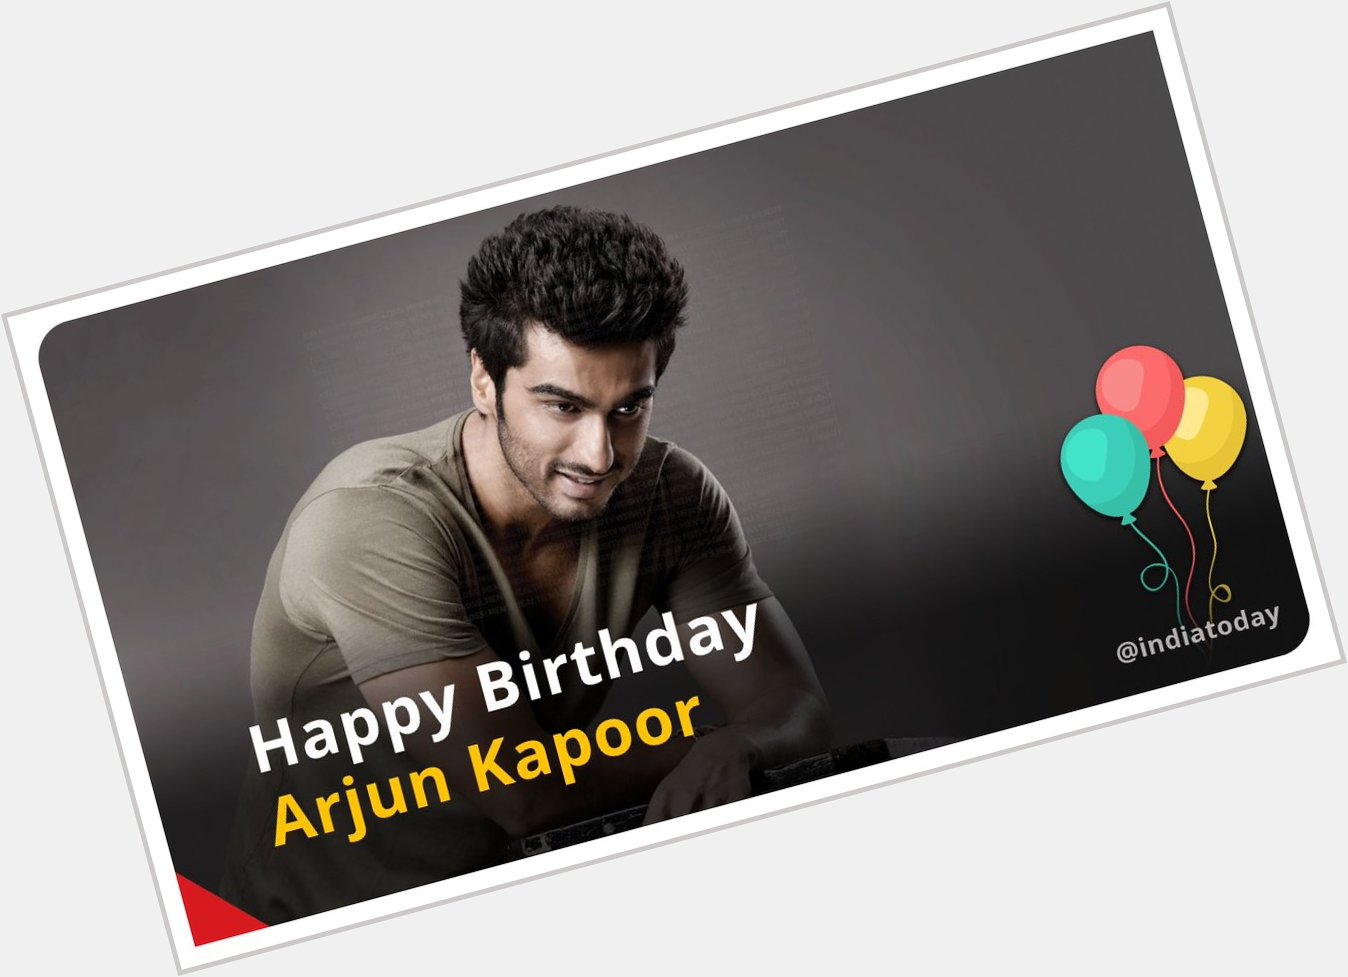 Wishing Arjun Kapoor ( a very happy birthday!   